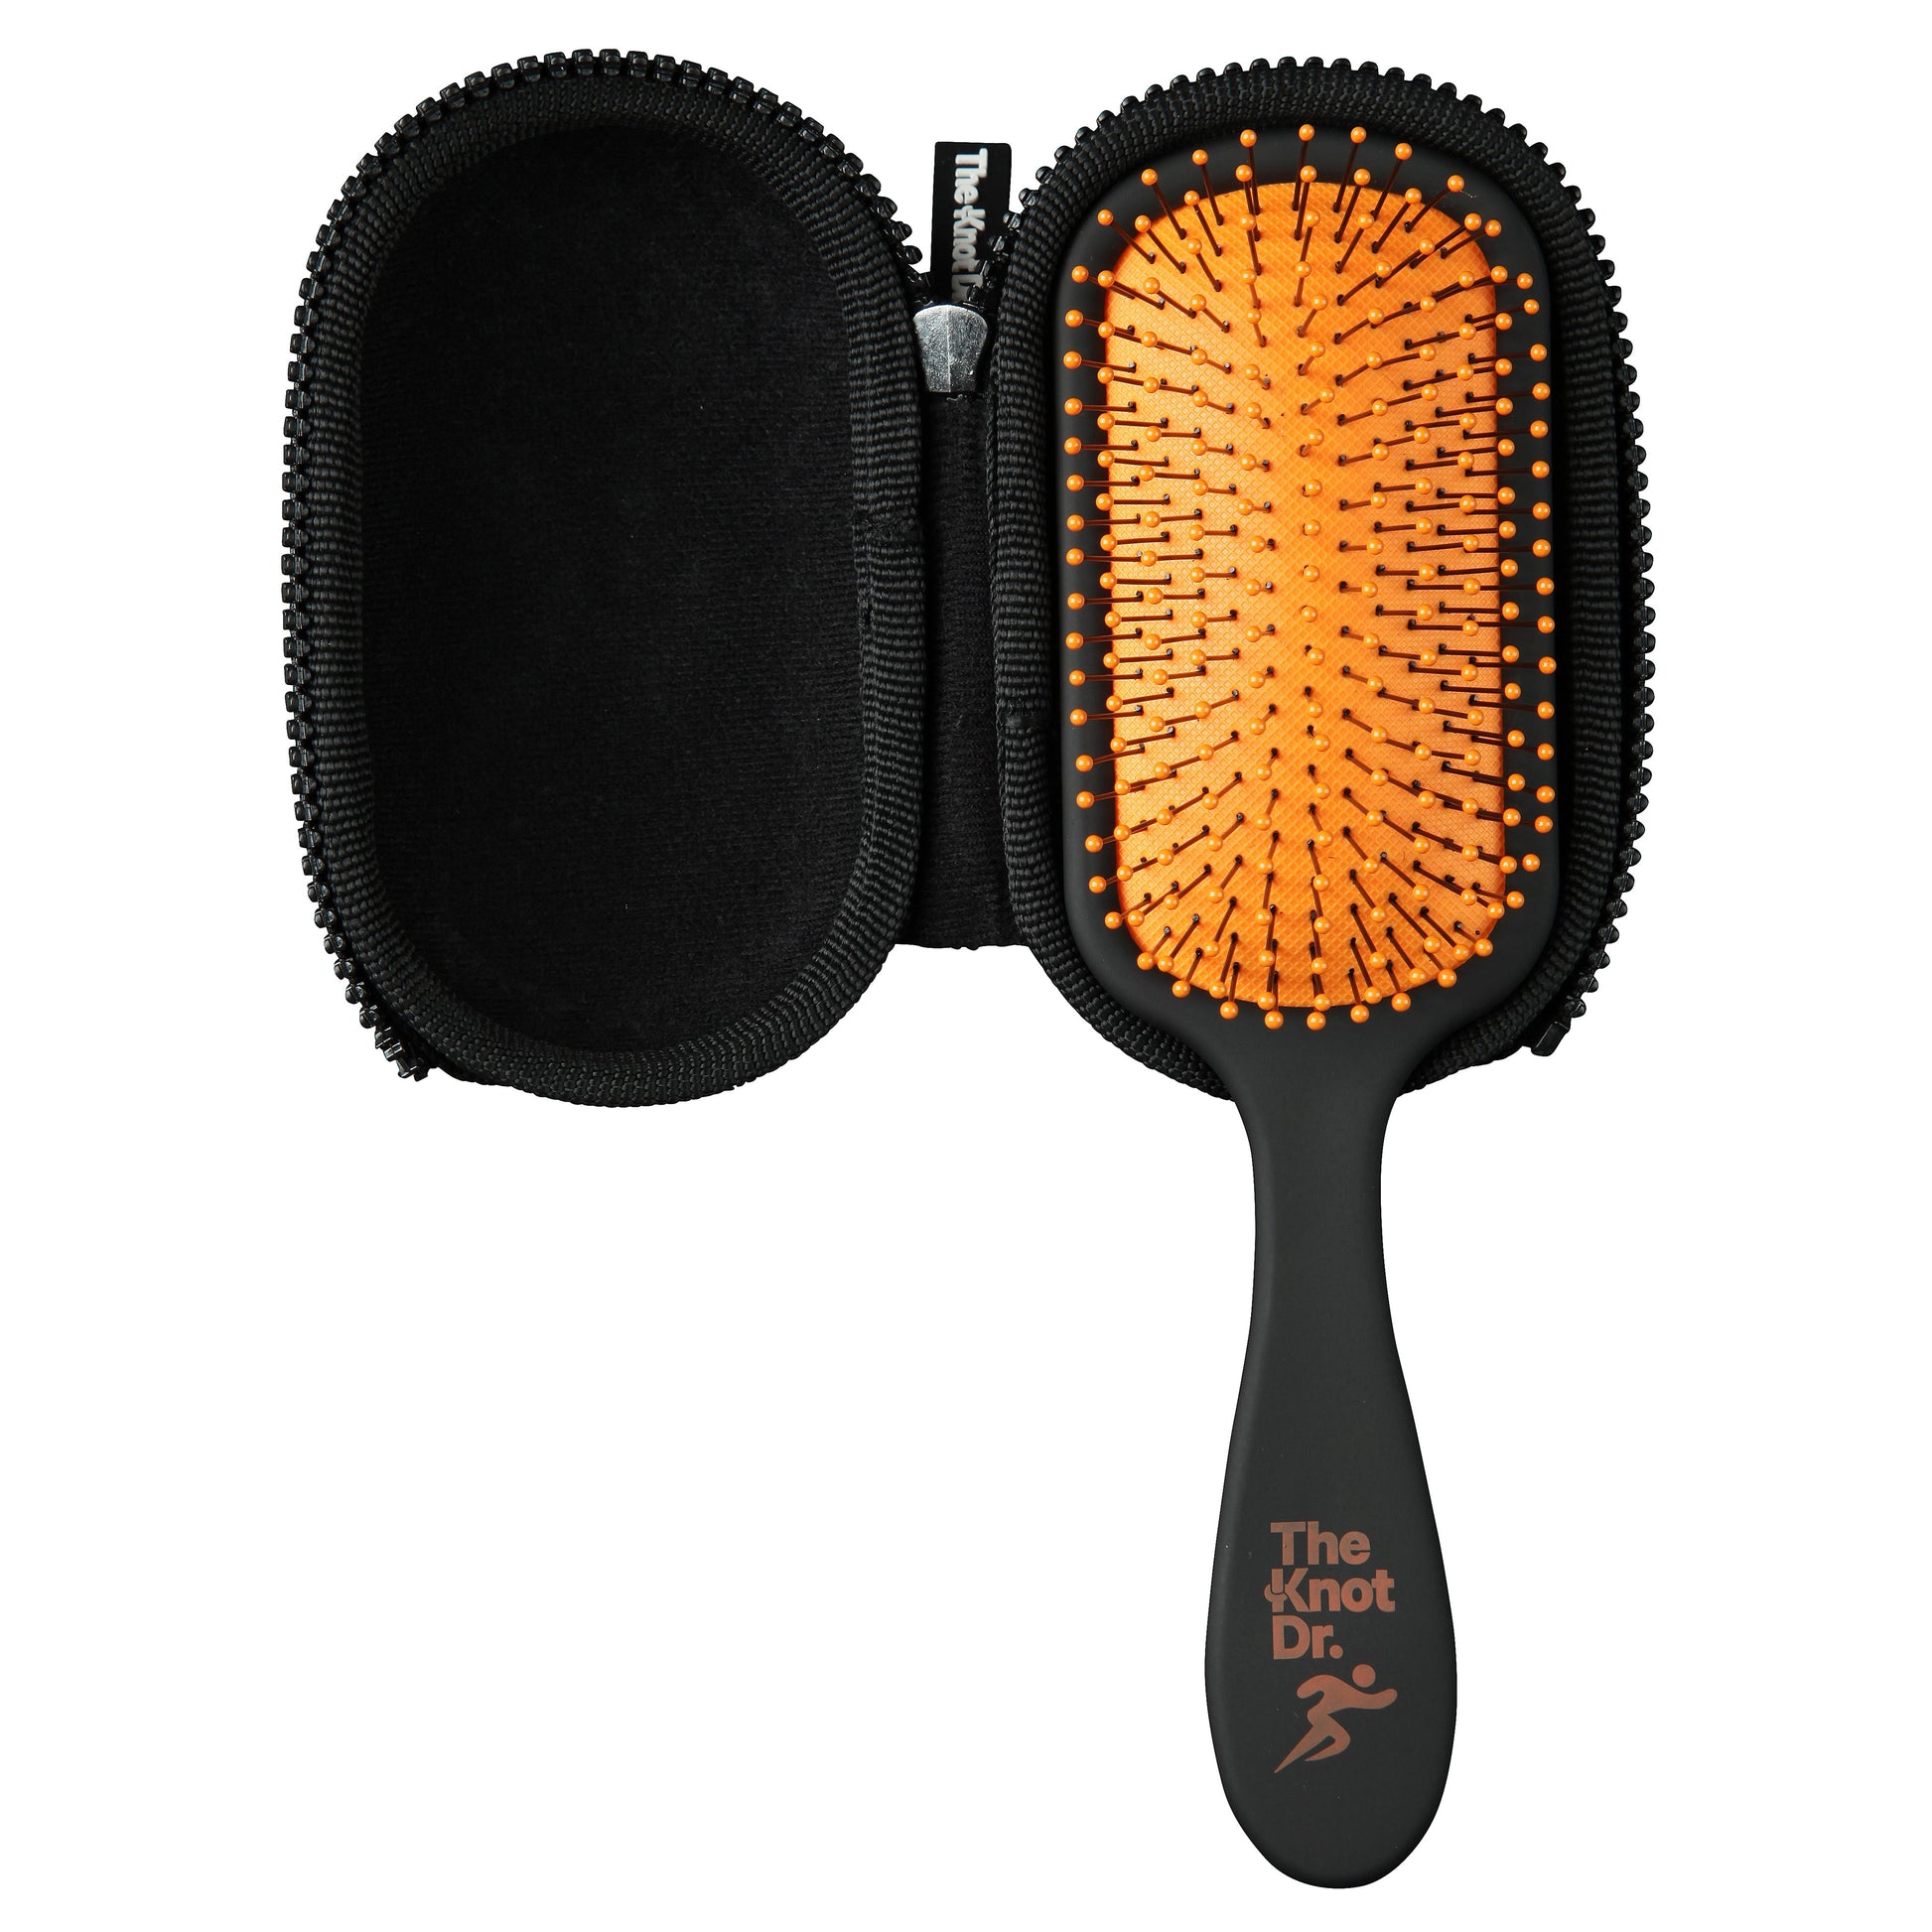 Detangling sport hairbrush inside the protective headcase